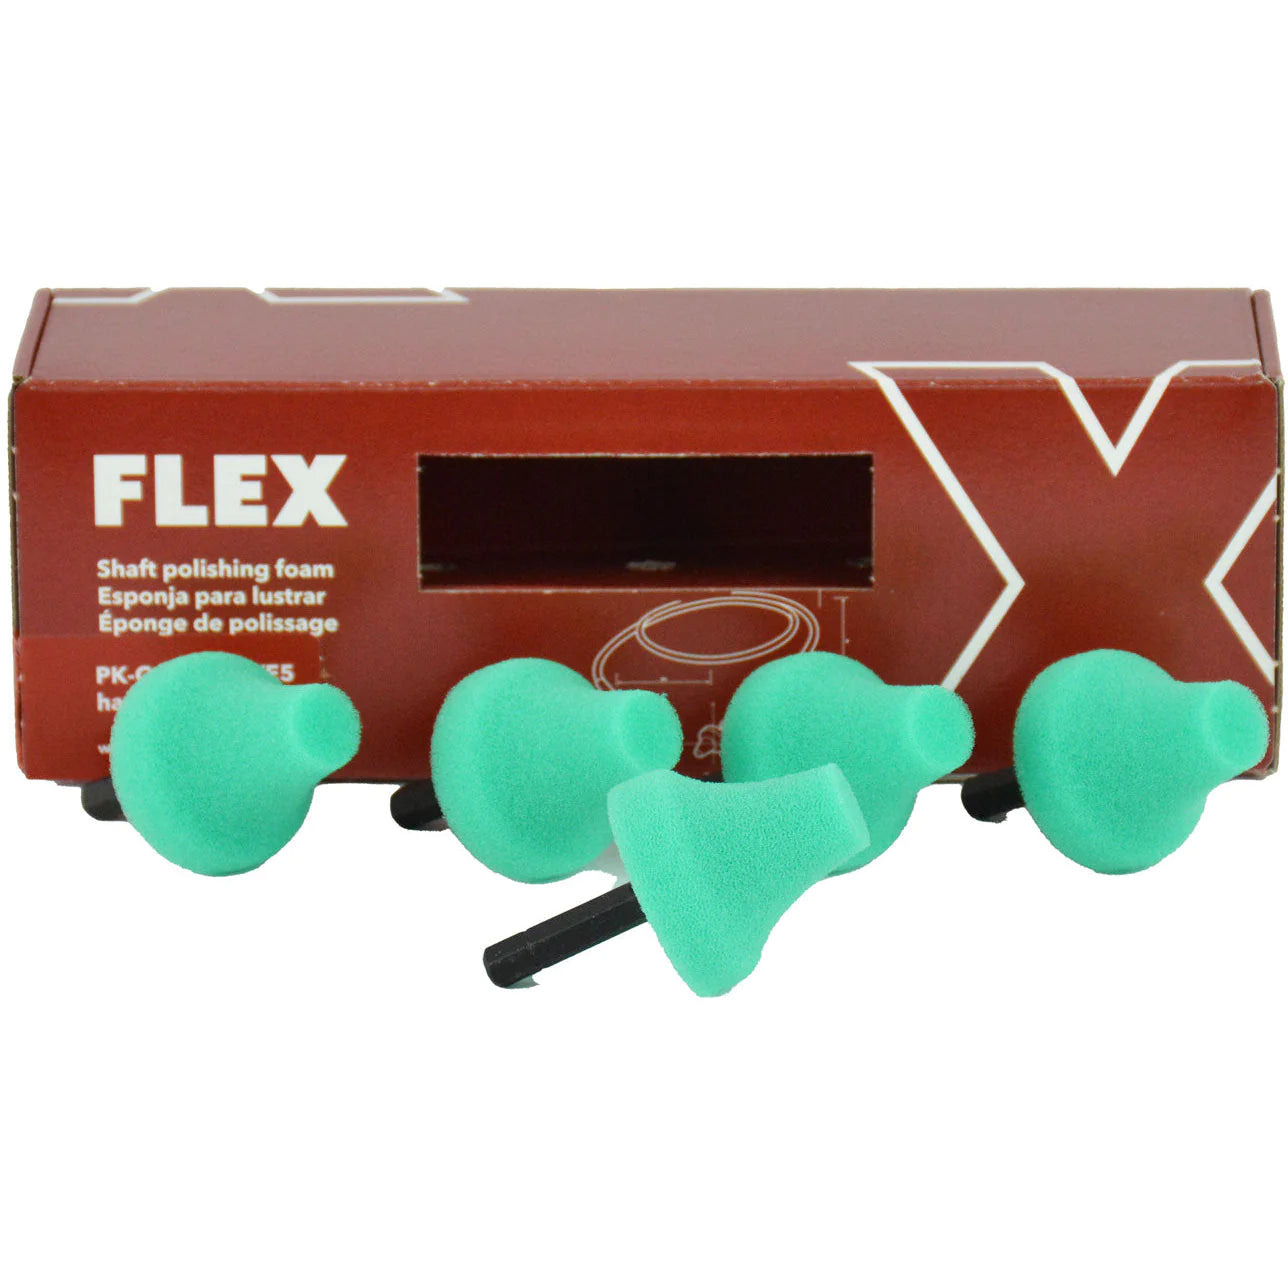 FLEX - FS140 (Replacement pads)